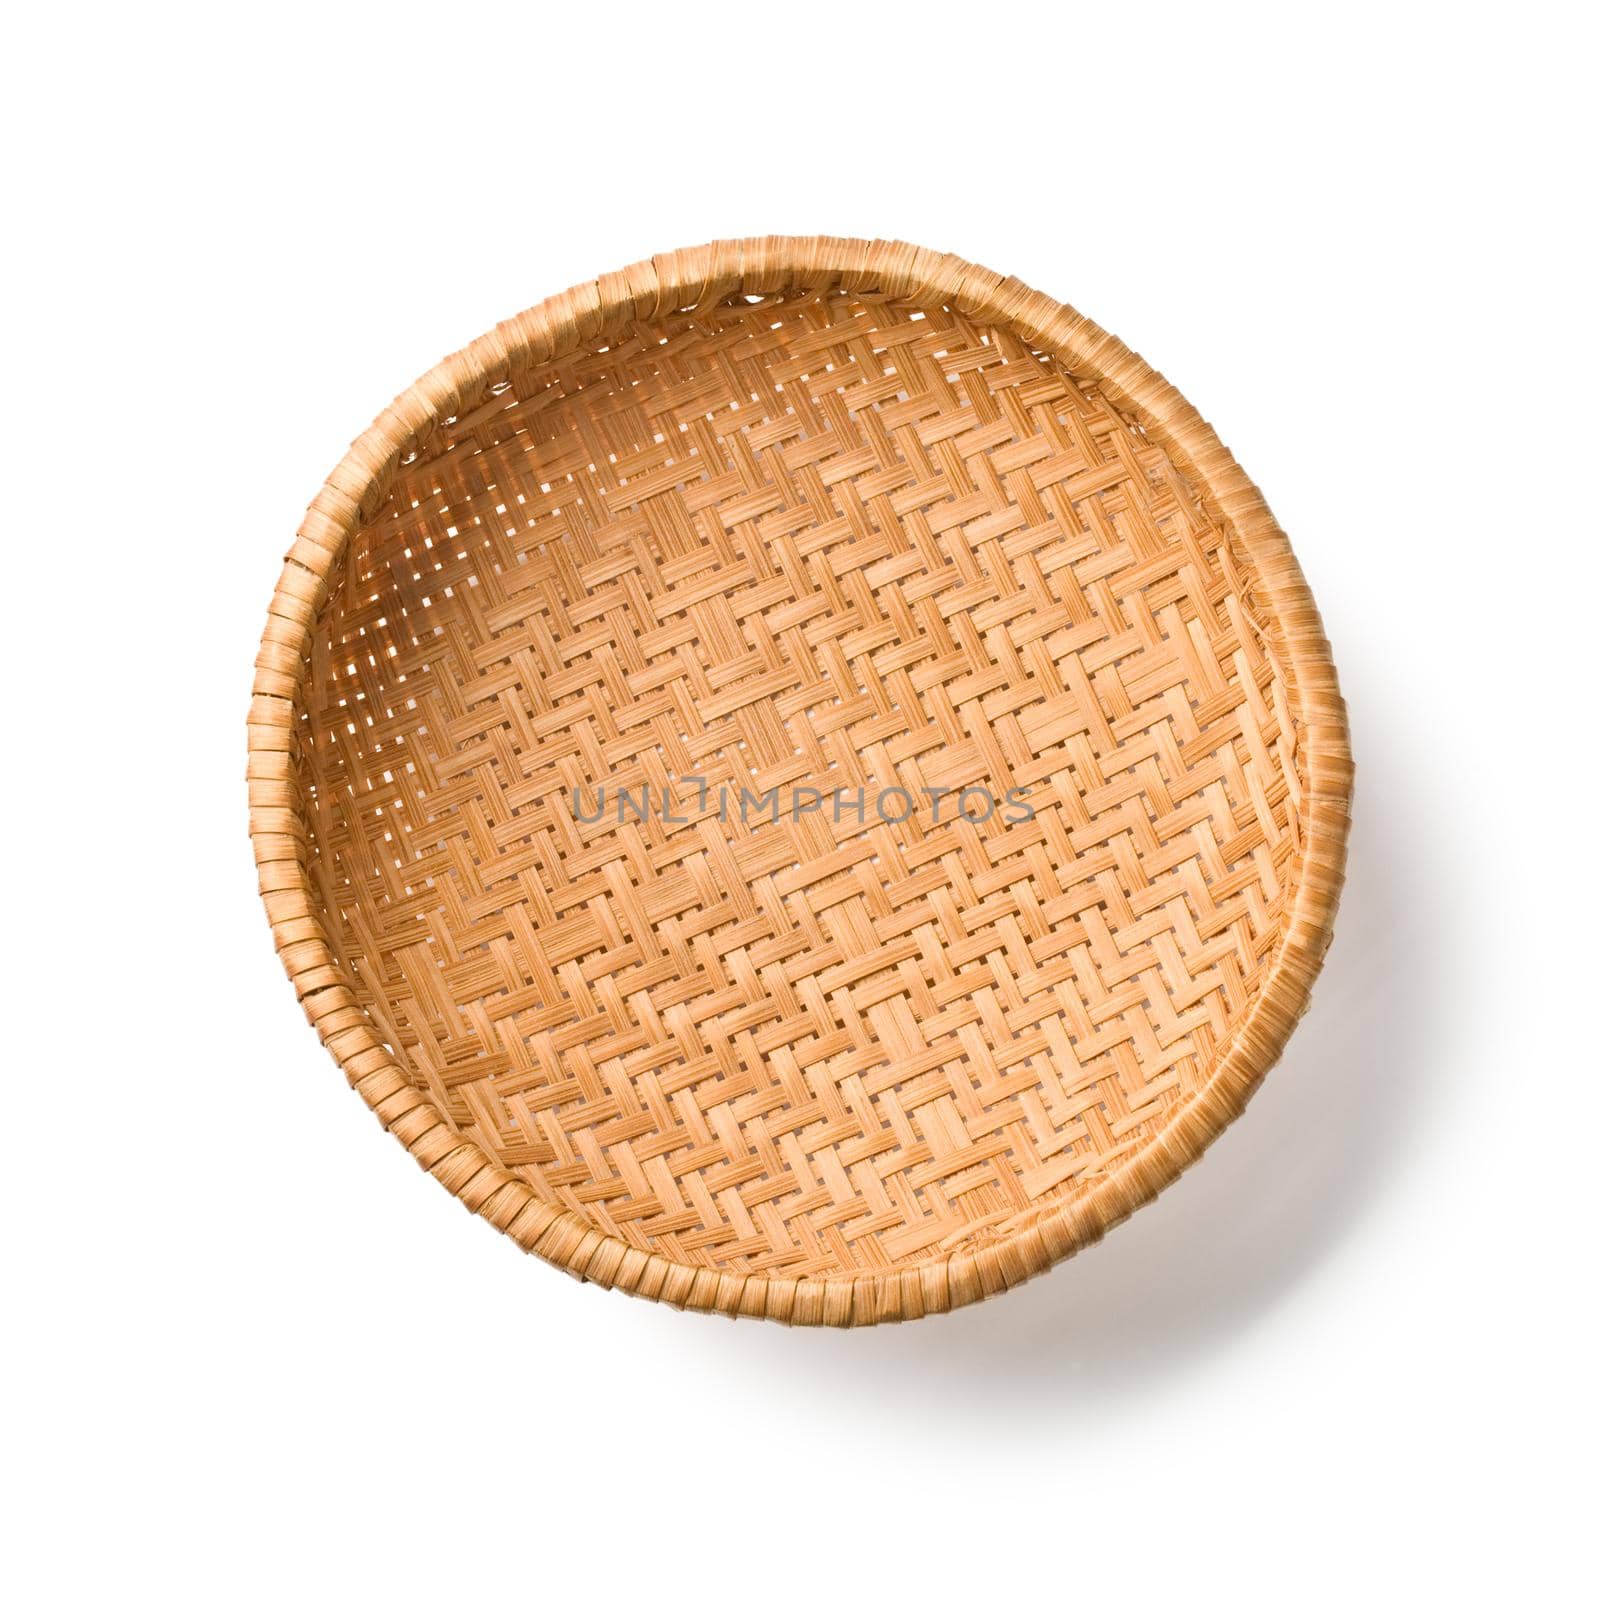 Dish of straw isolated on white background